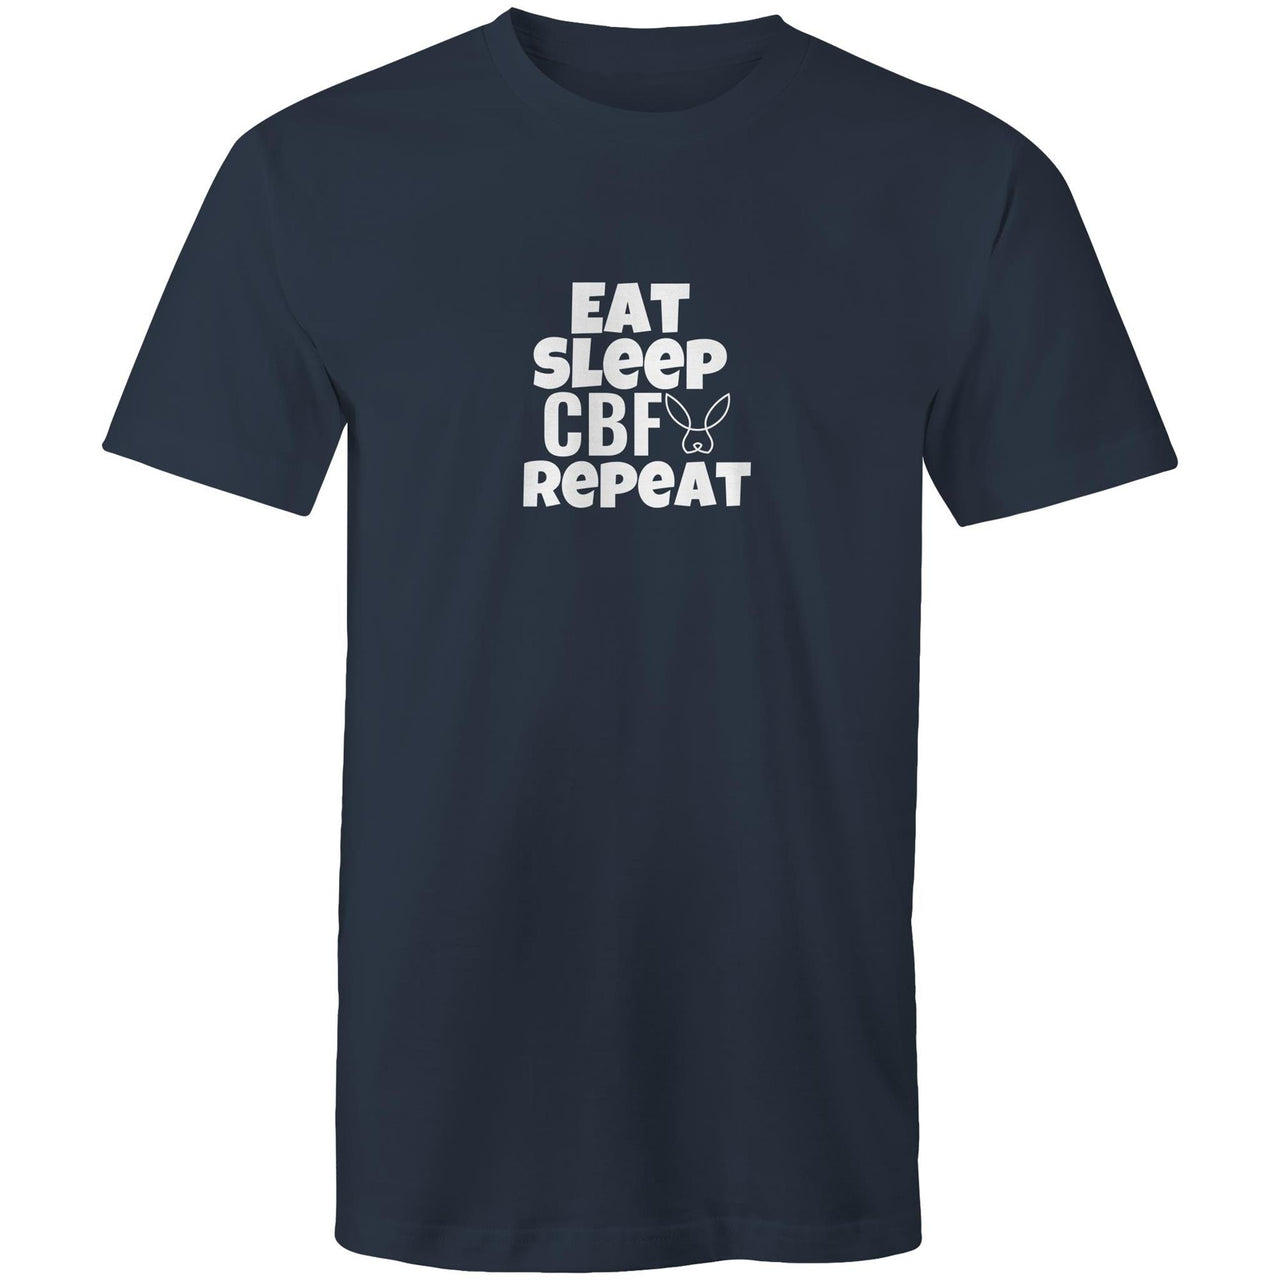 Eat Sleep CBF Repeat Crew Navy T-Shirt by CBF Clothing